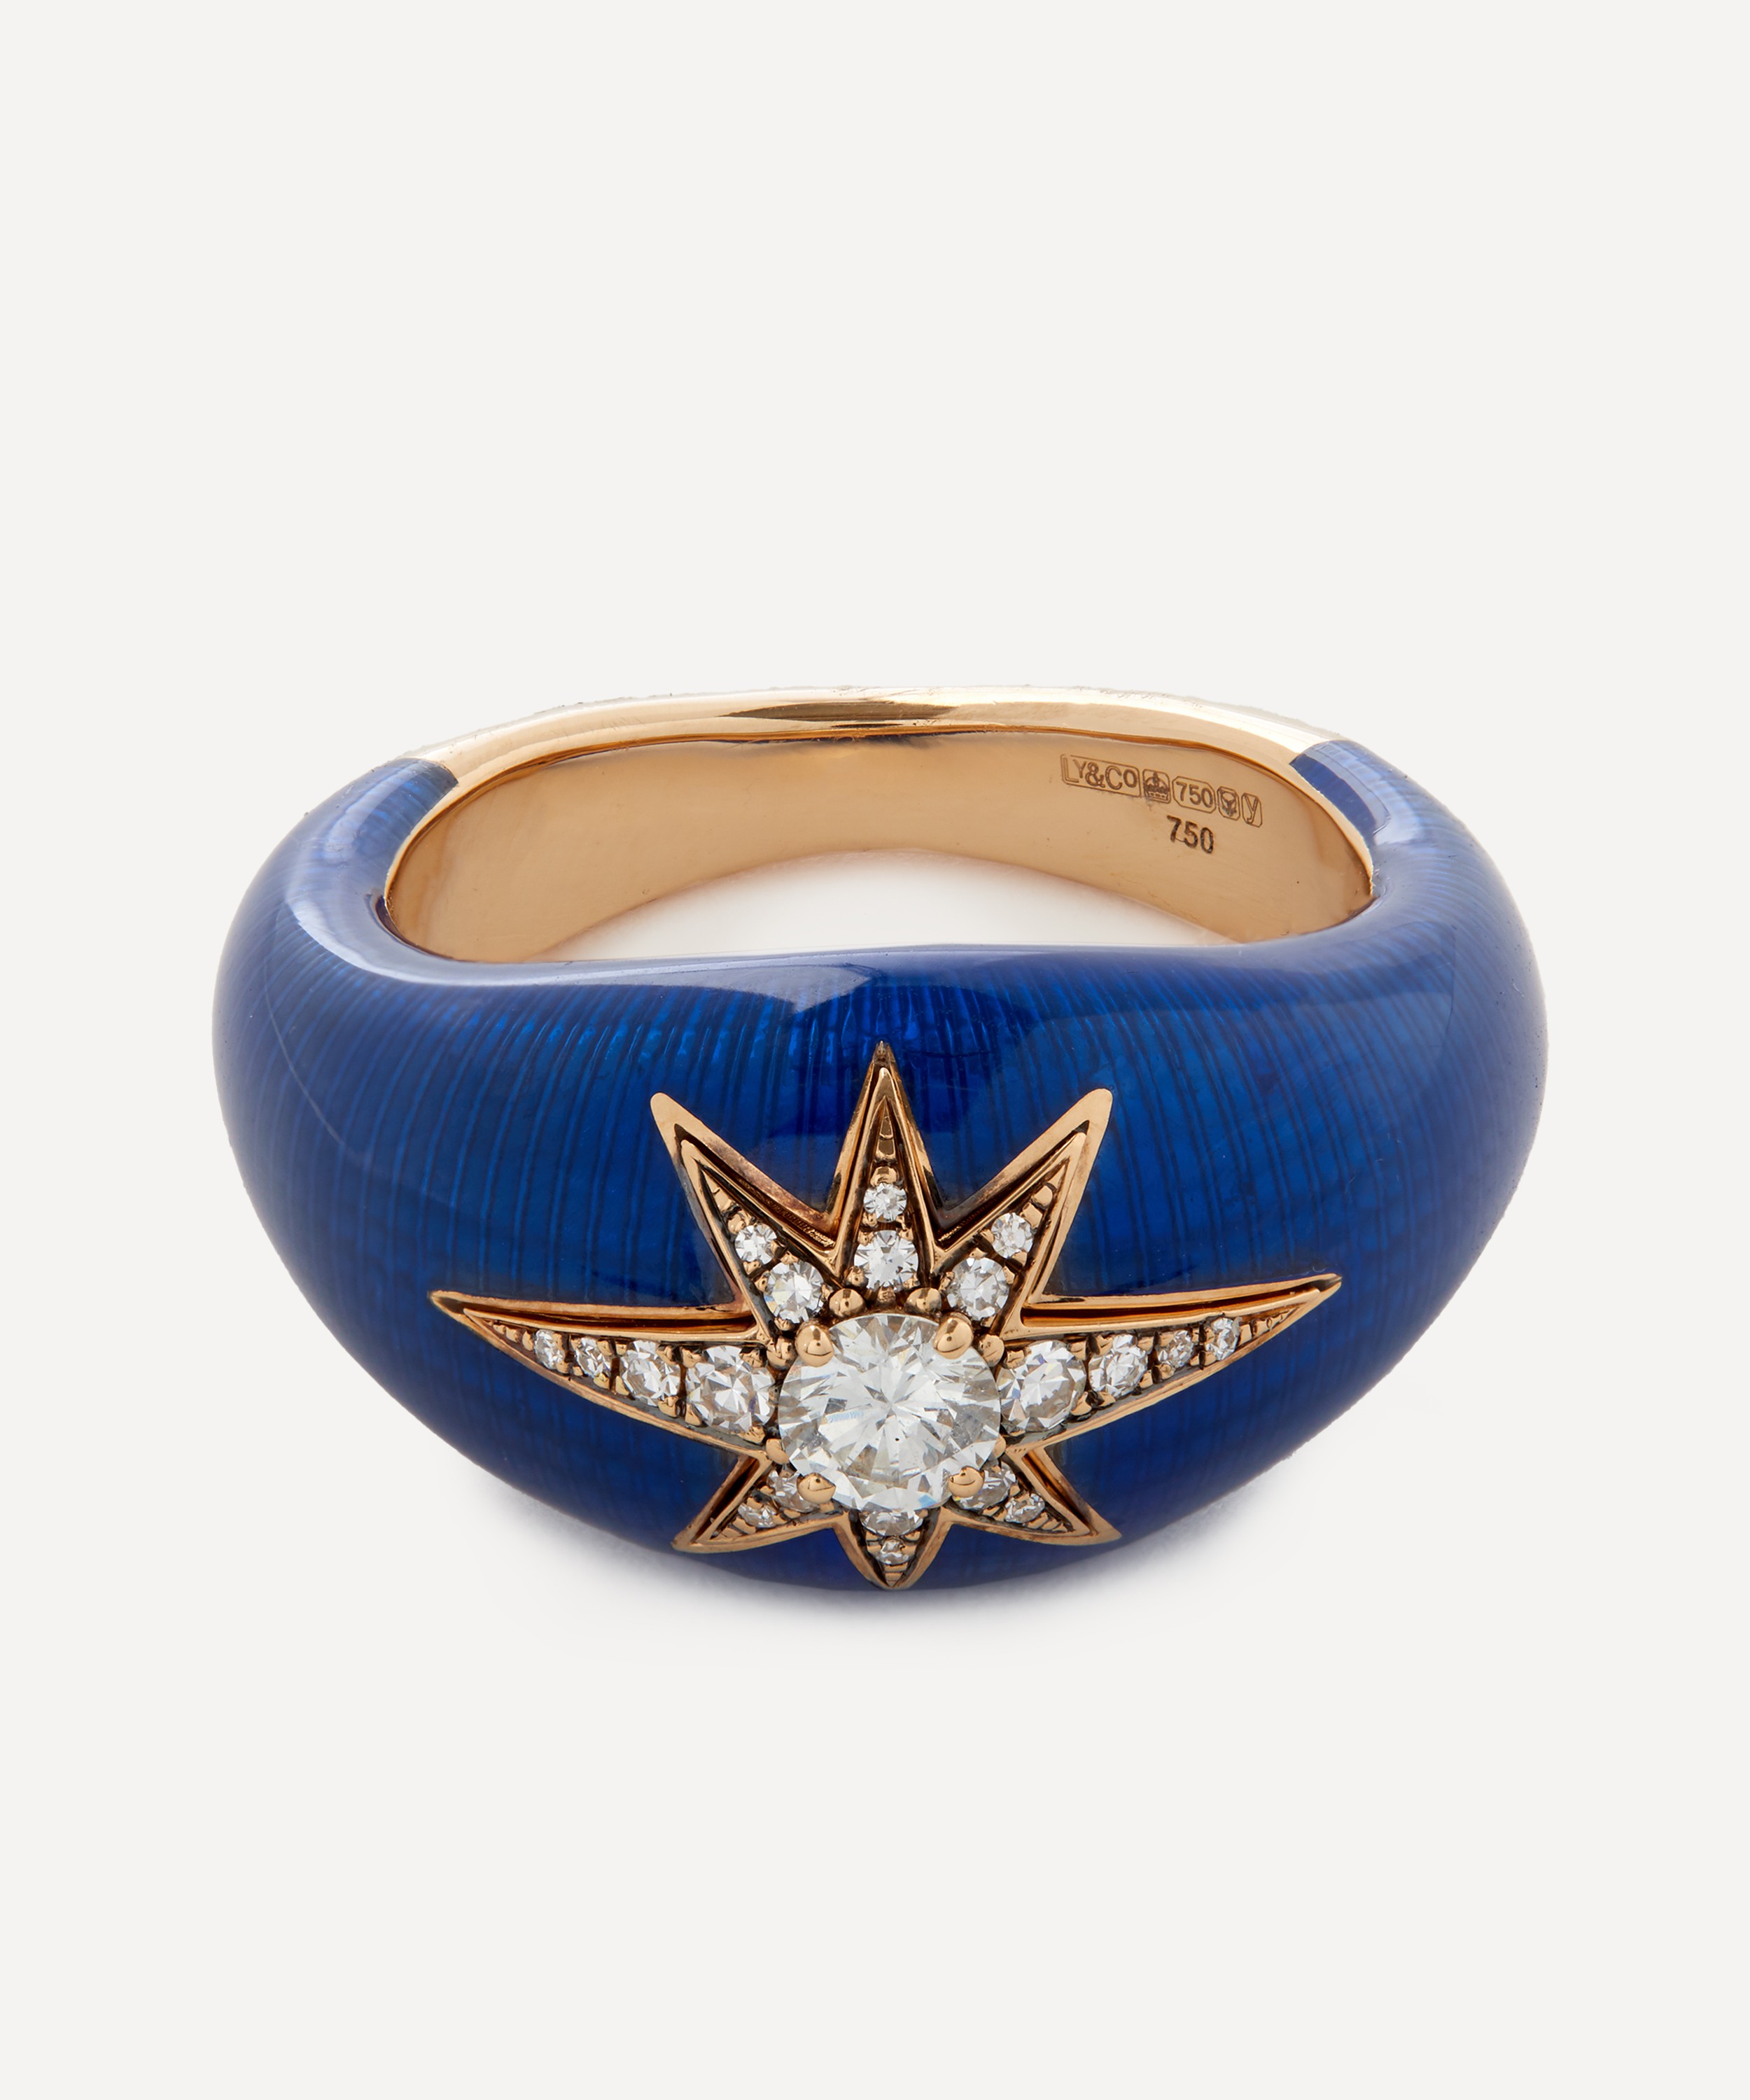 Selim Mouzannar - 18ct Gold Aida Navy Enamel and Diamond Ring